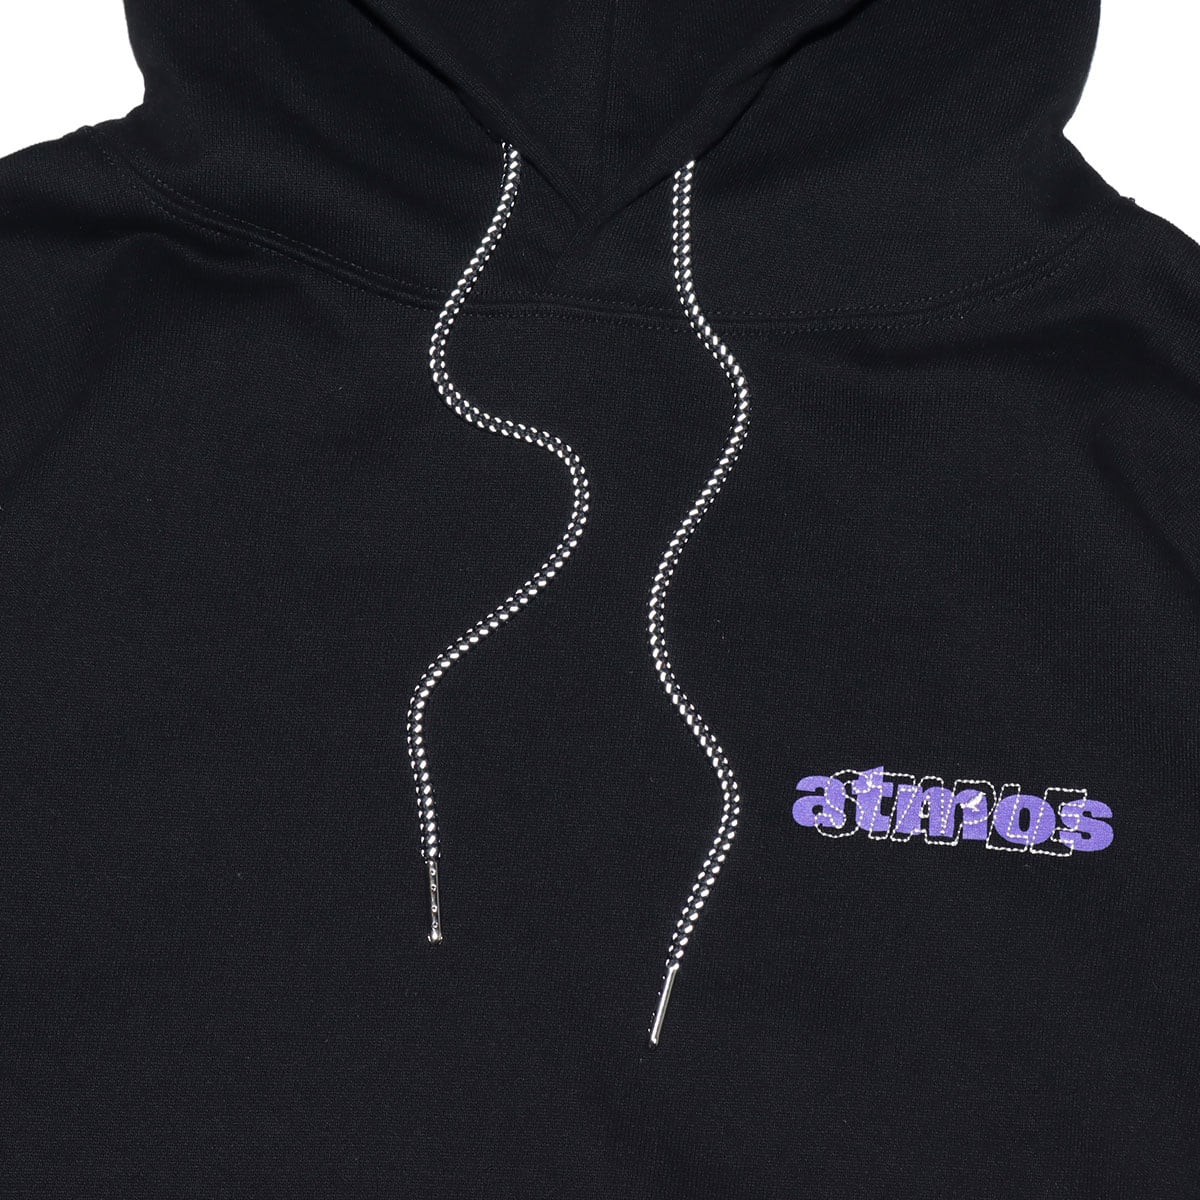 新品 atmos staple hoodie black M サイズ